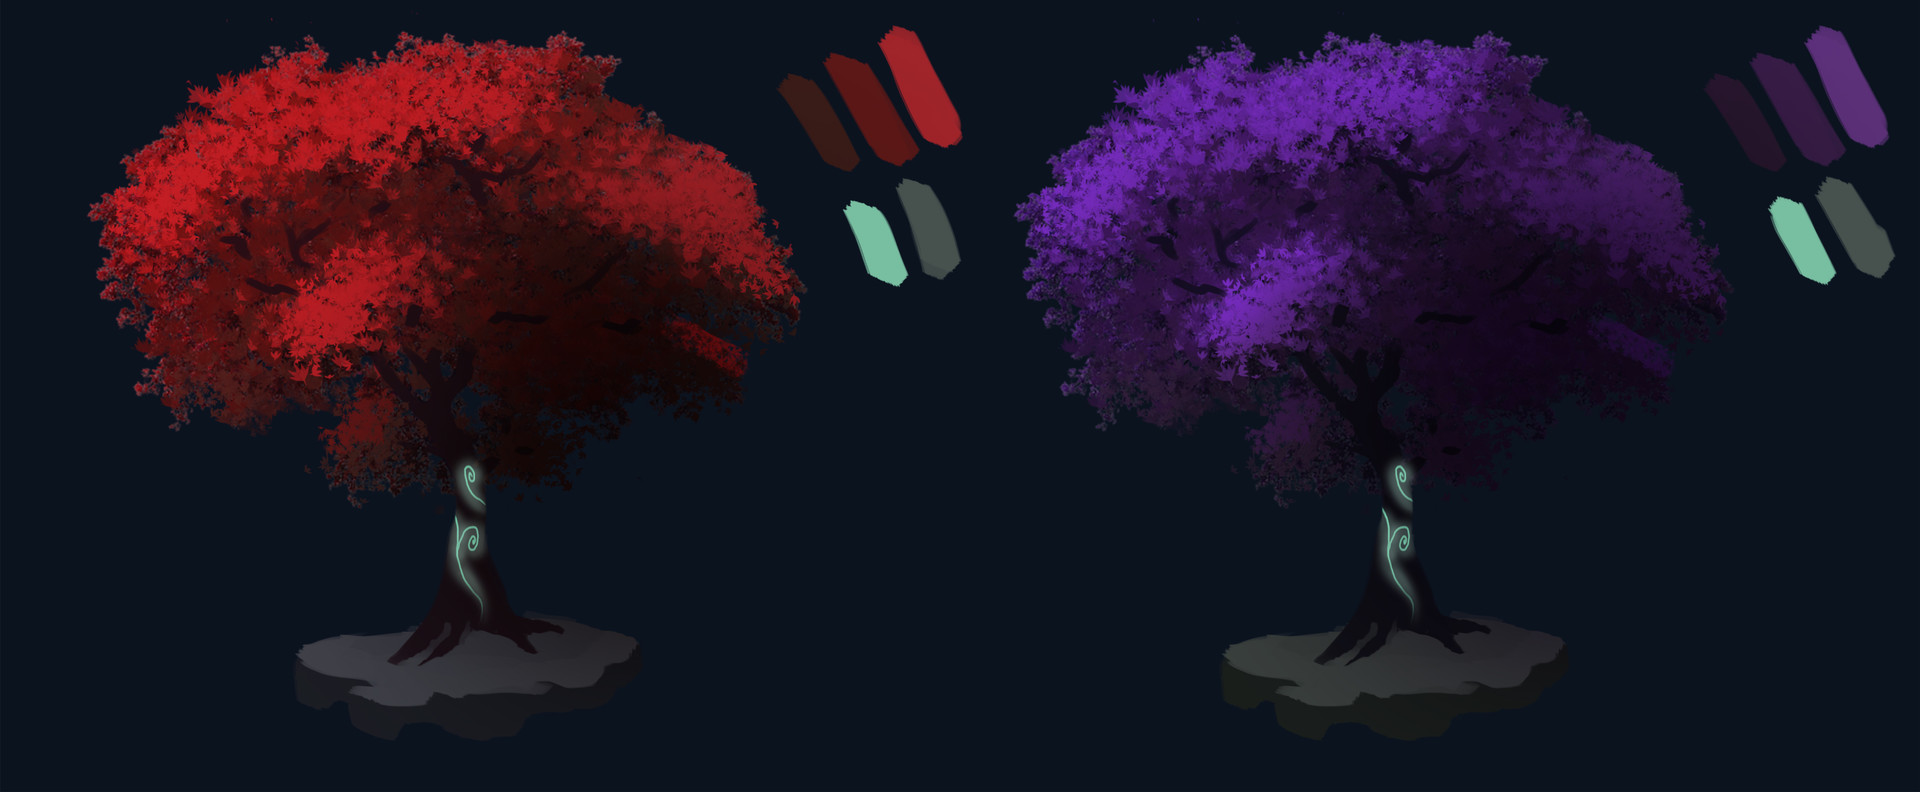 Tree Concept Art